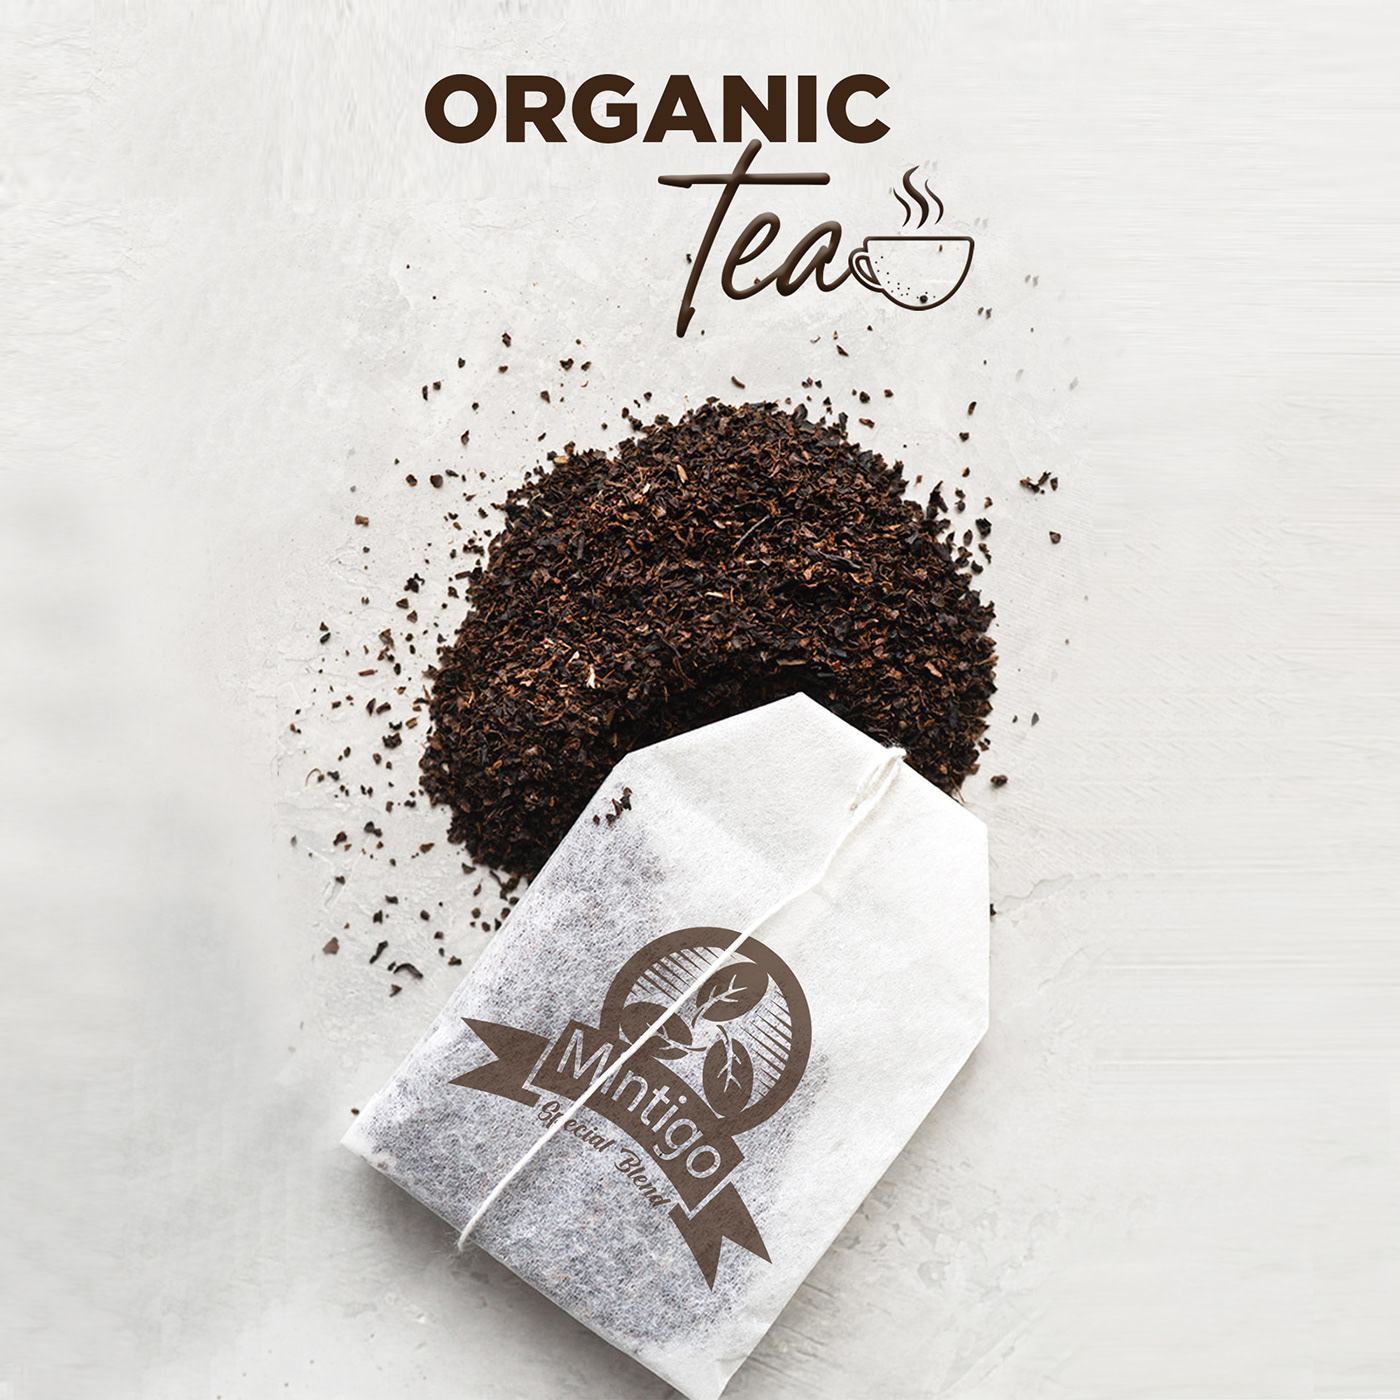 ads Advertising  fresh Greentea marketing   Social media post tea teabag